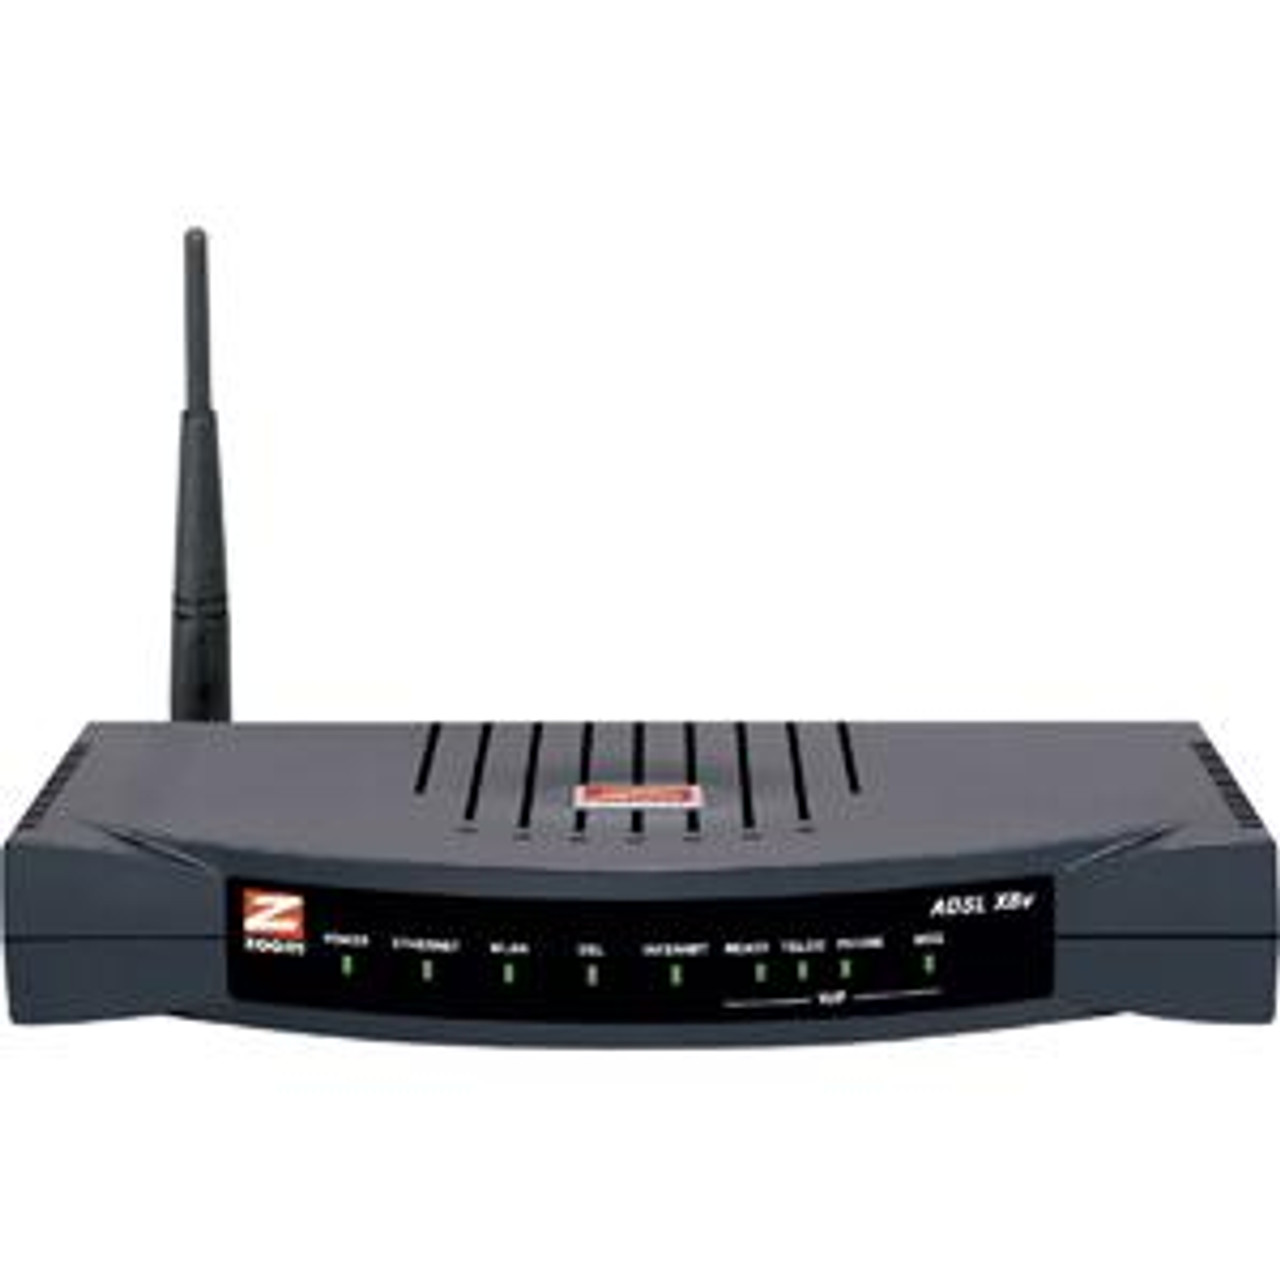 5697-00-00F Zoom X6v 5697 ADSL Router 4 x 10/100Base-TX LAN, 1 x FXS, 1 x FXO IEEE 802.11b/g 125Mbps (Refurbished)